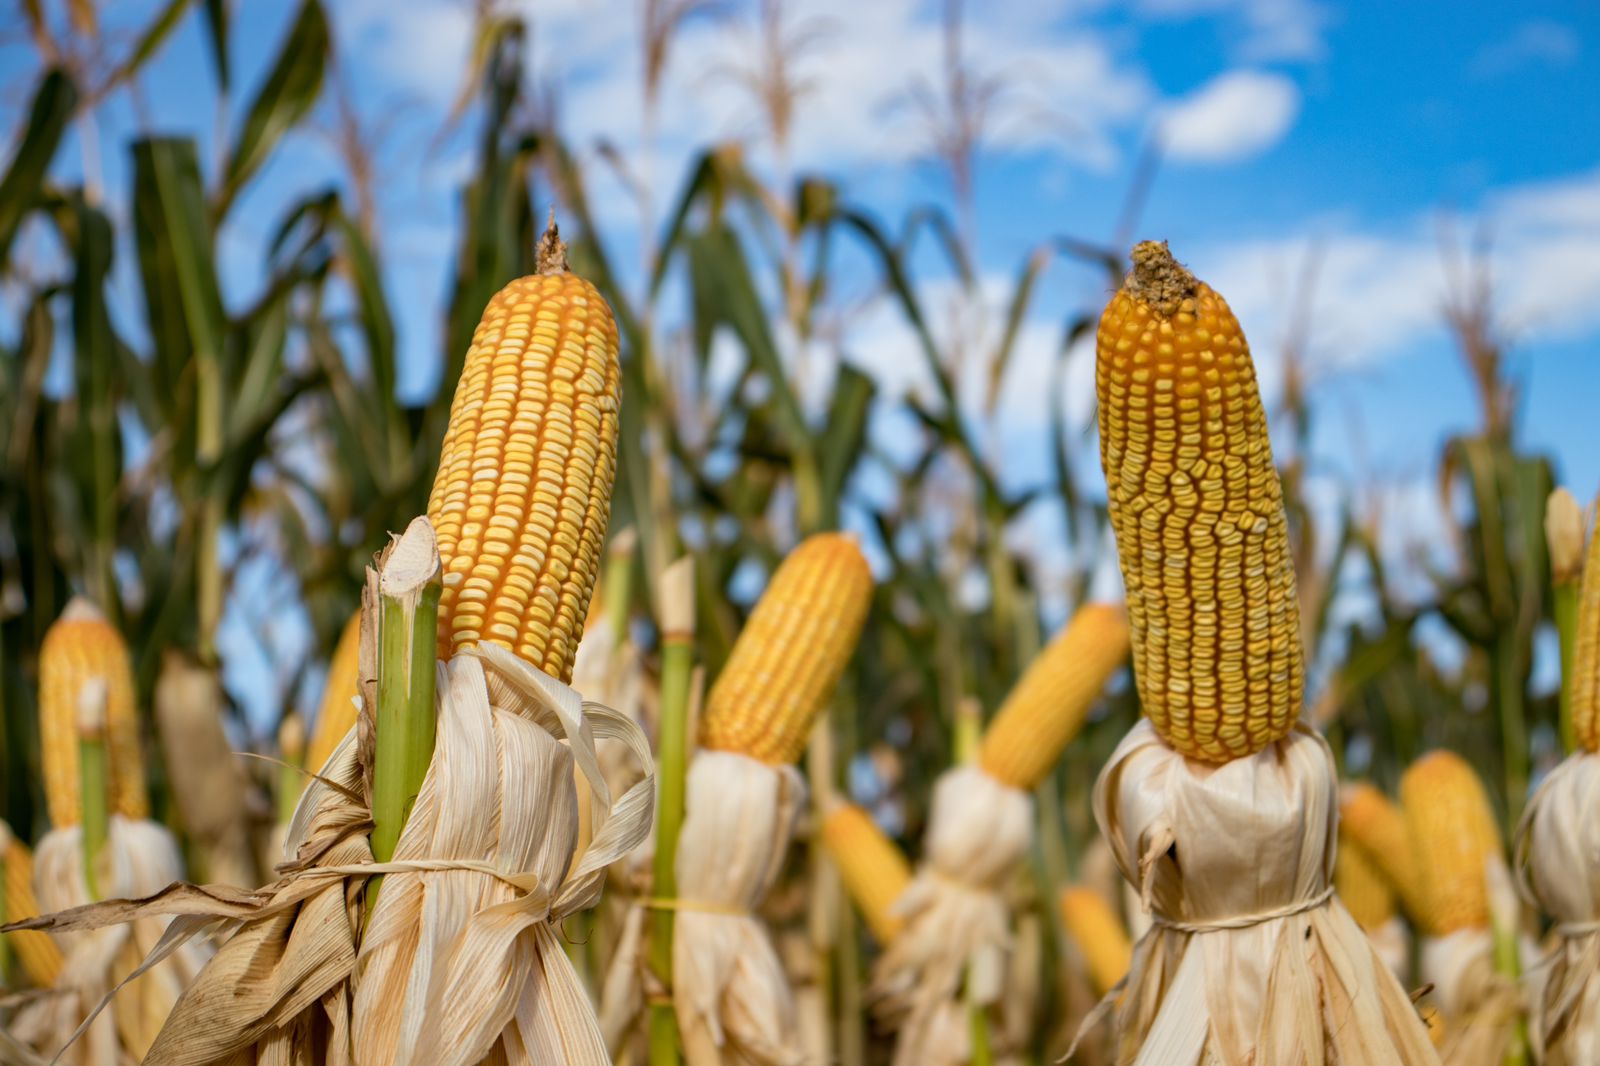 Reducir la importación de maíz transgénico de Estados Unidos dañará a la economía mexicana: UMFFAAC